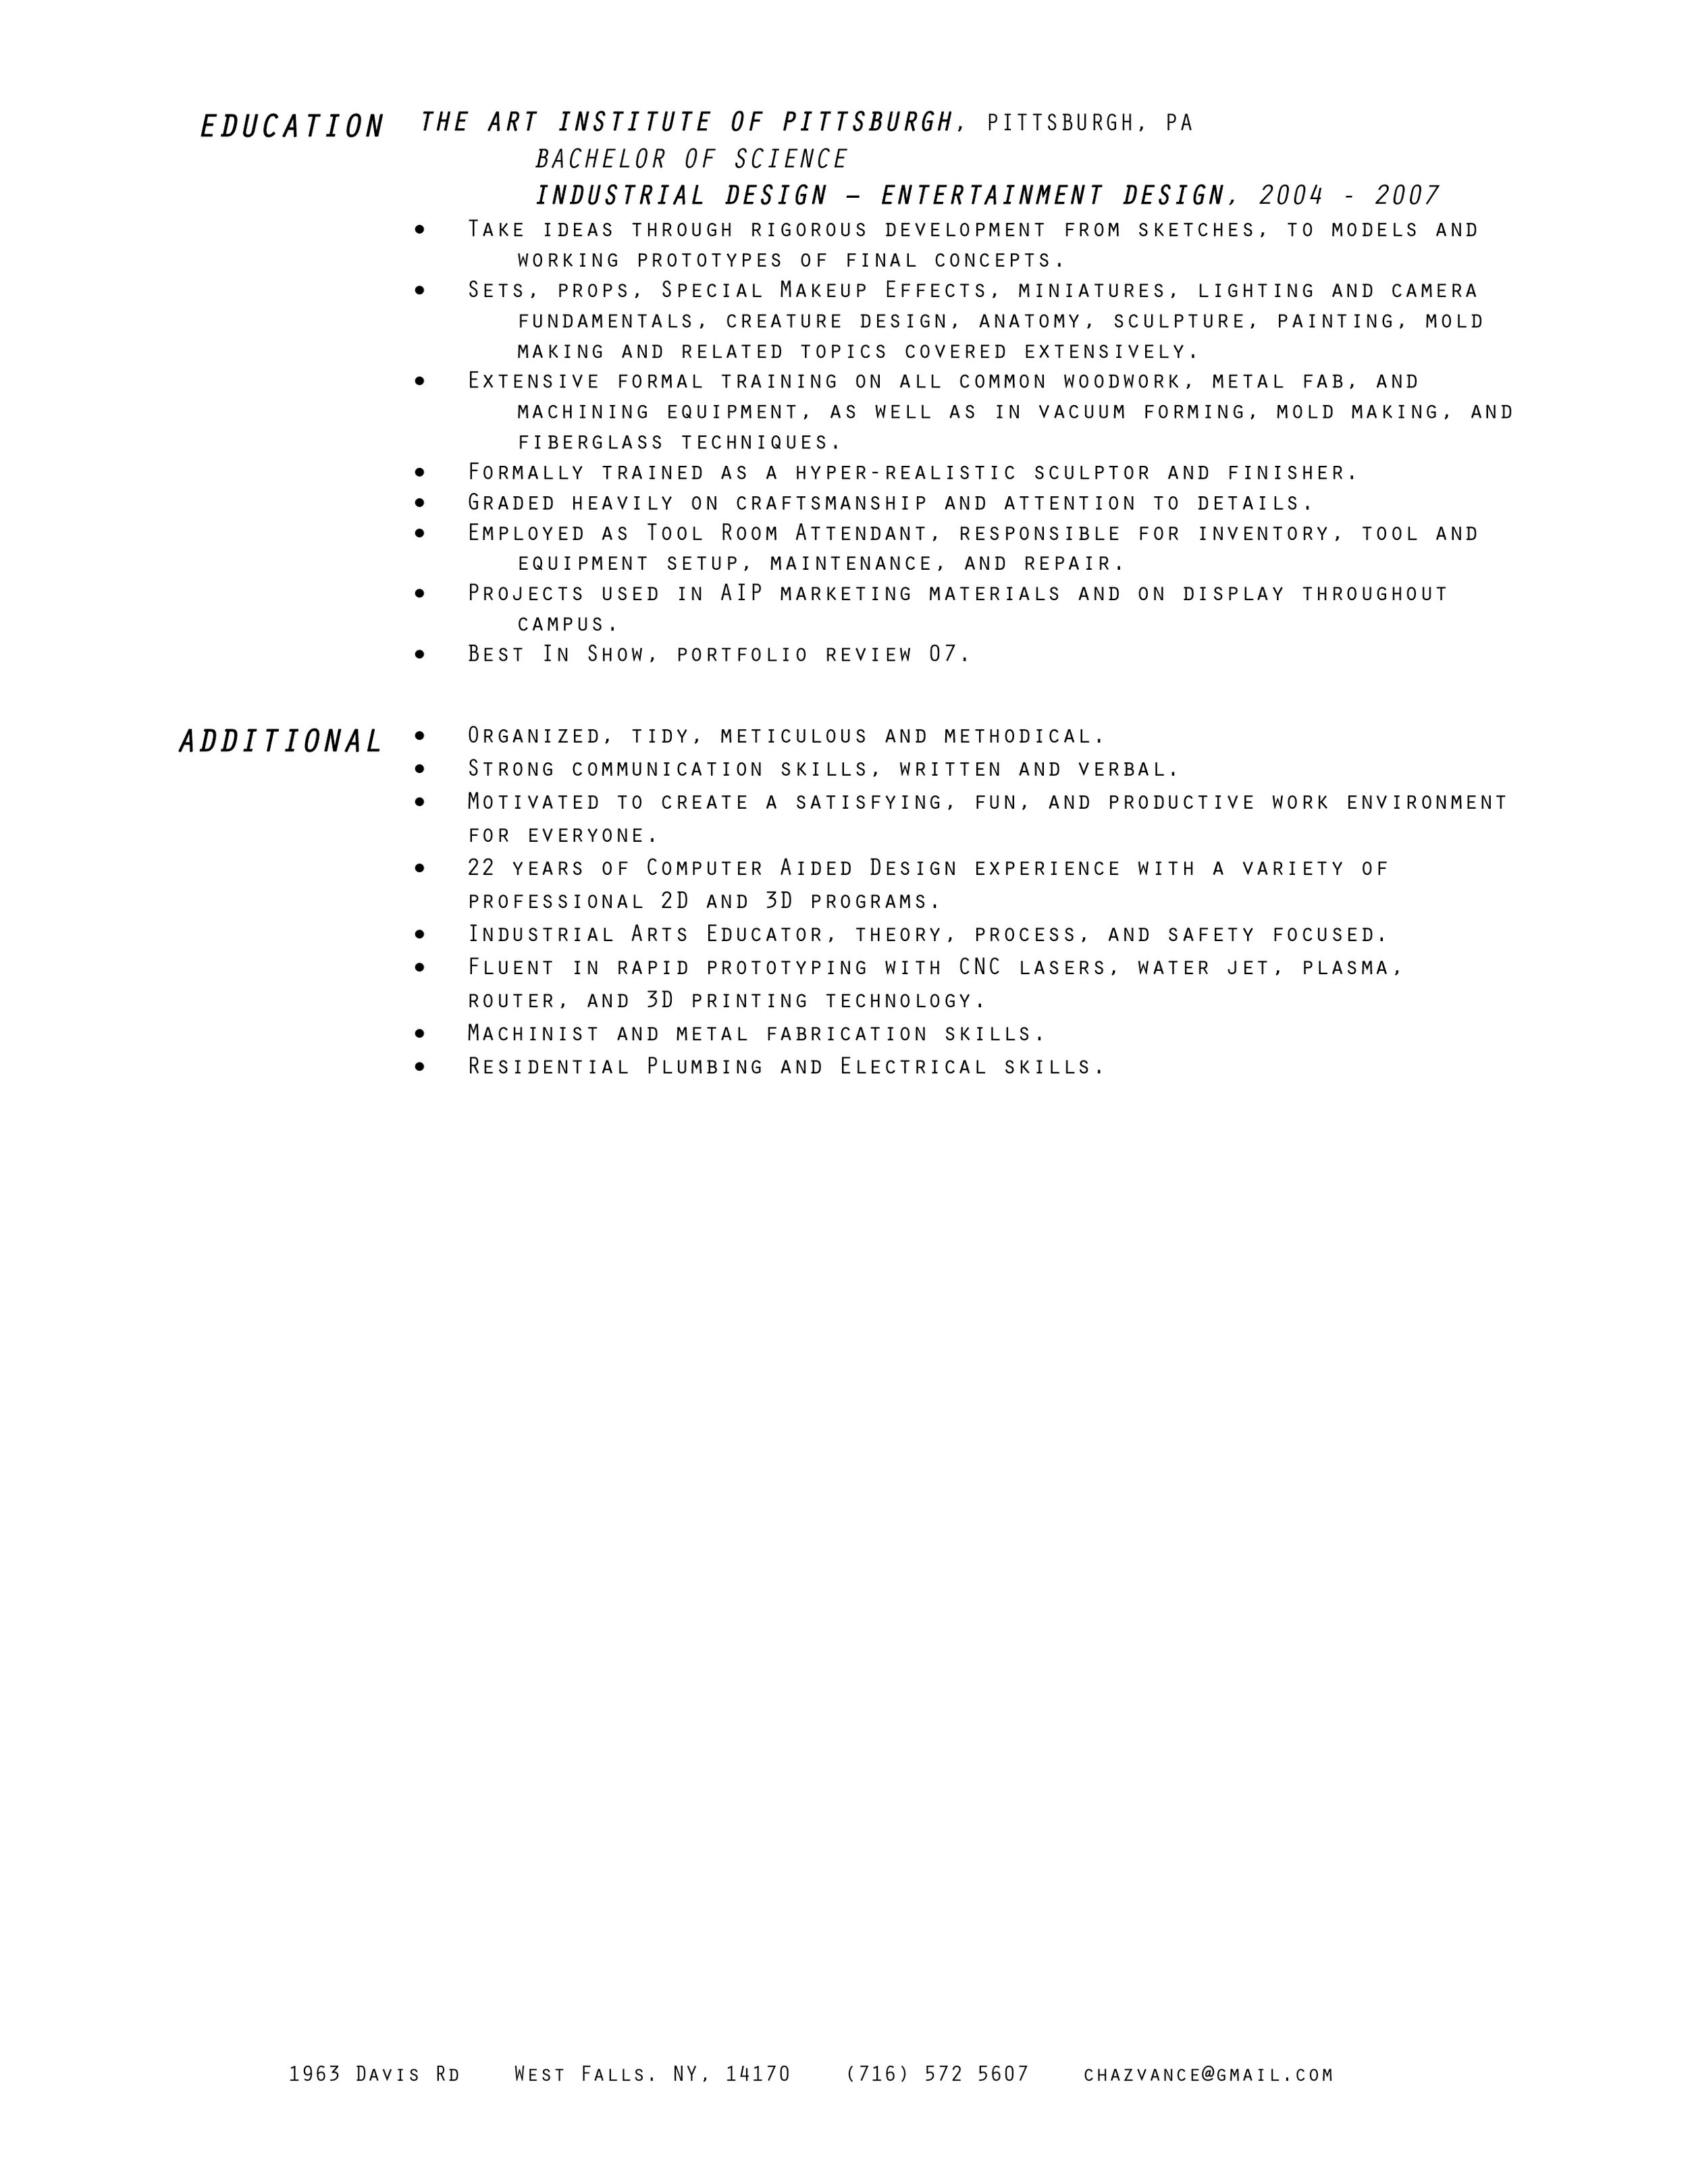 Resume Page 3.jpg